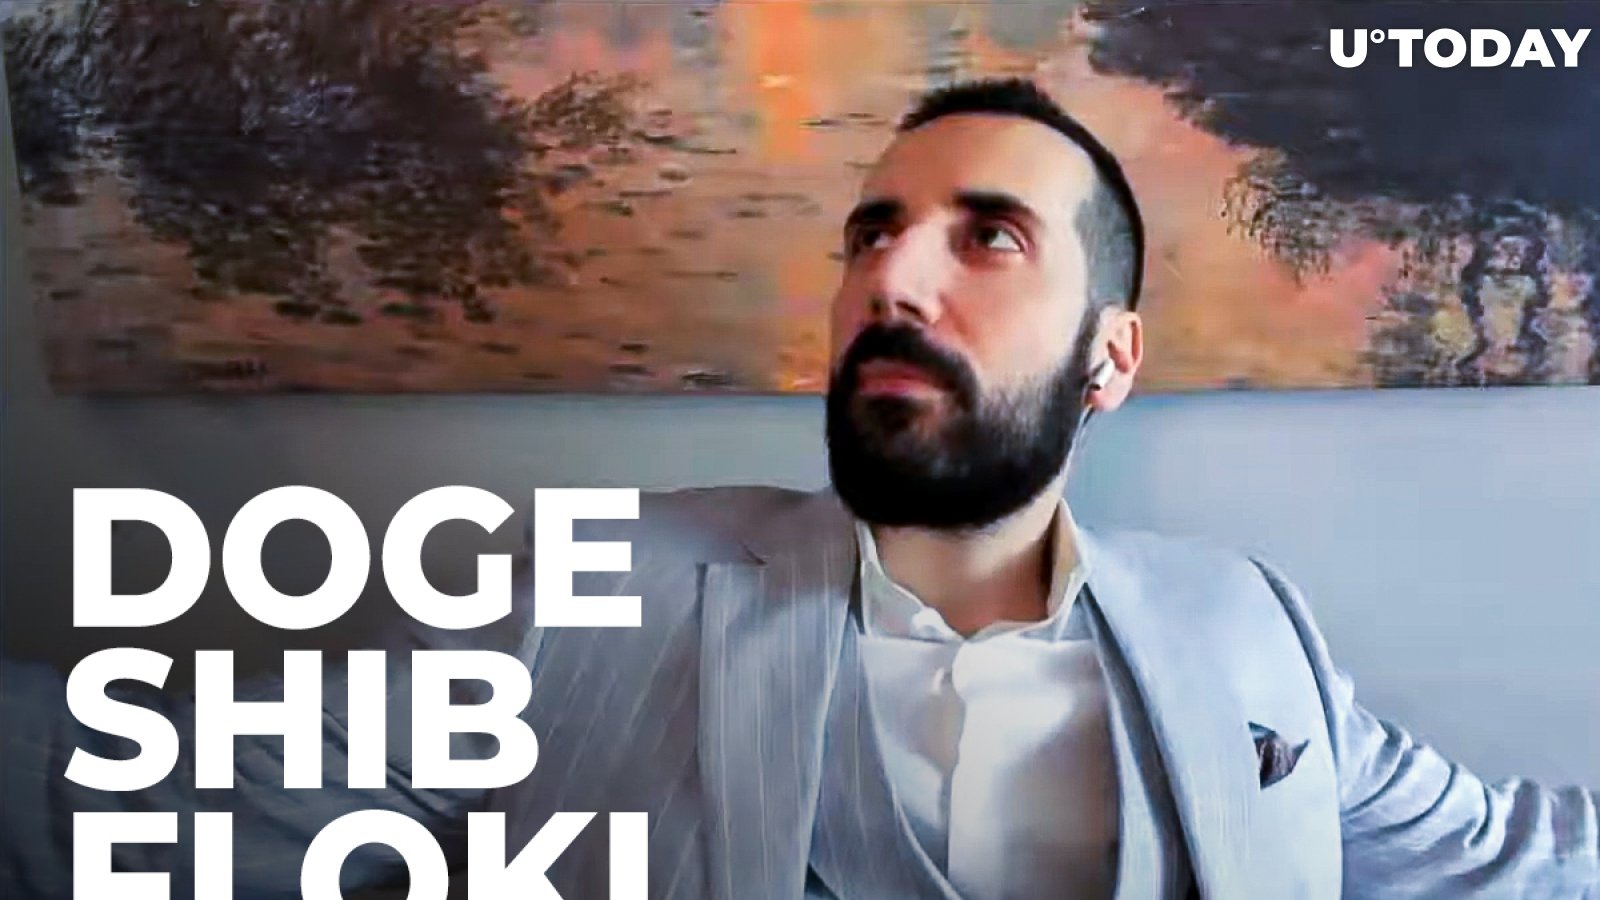 Influencer David Gokhshtein Draws Attention to DOGE, SHIB, FLOKI Massive Rise